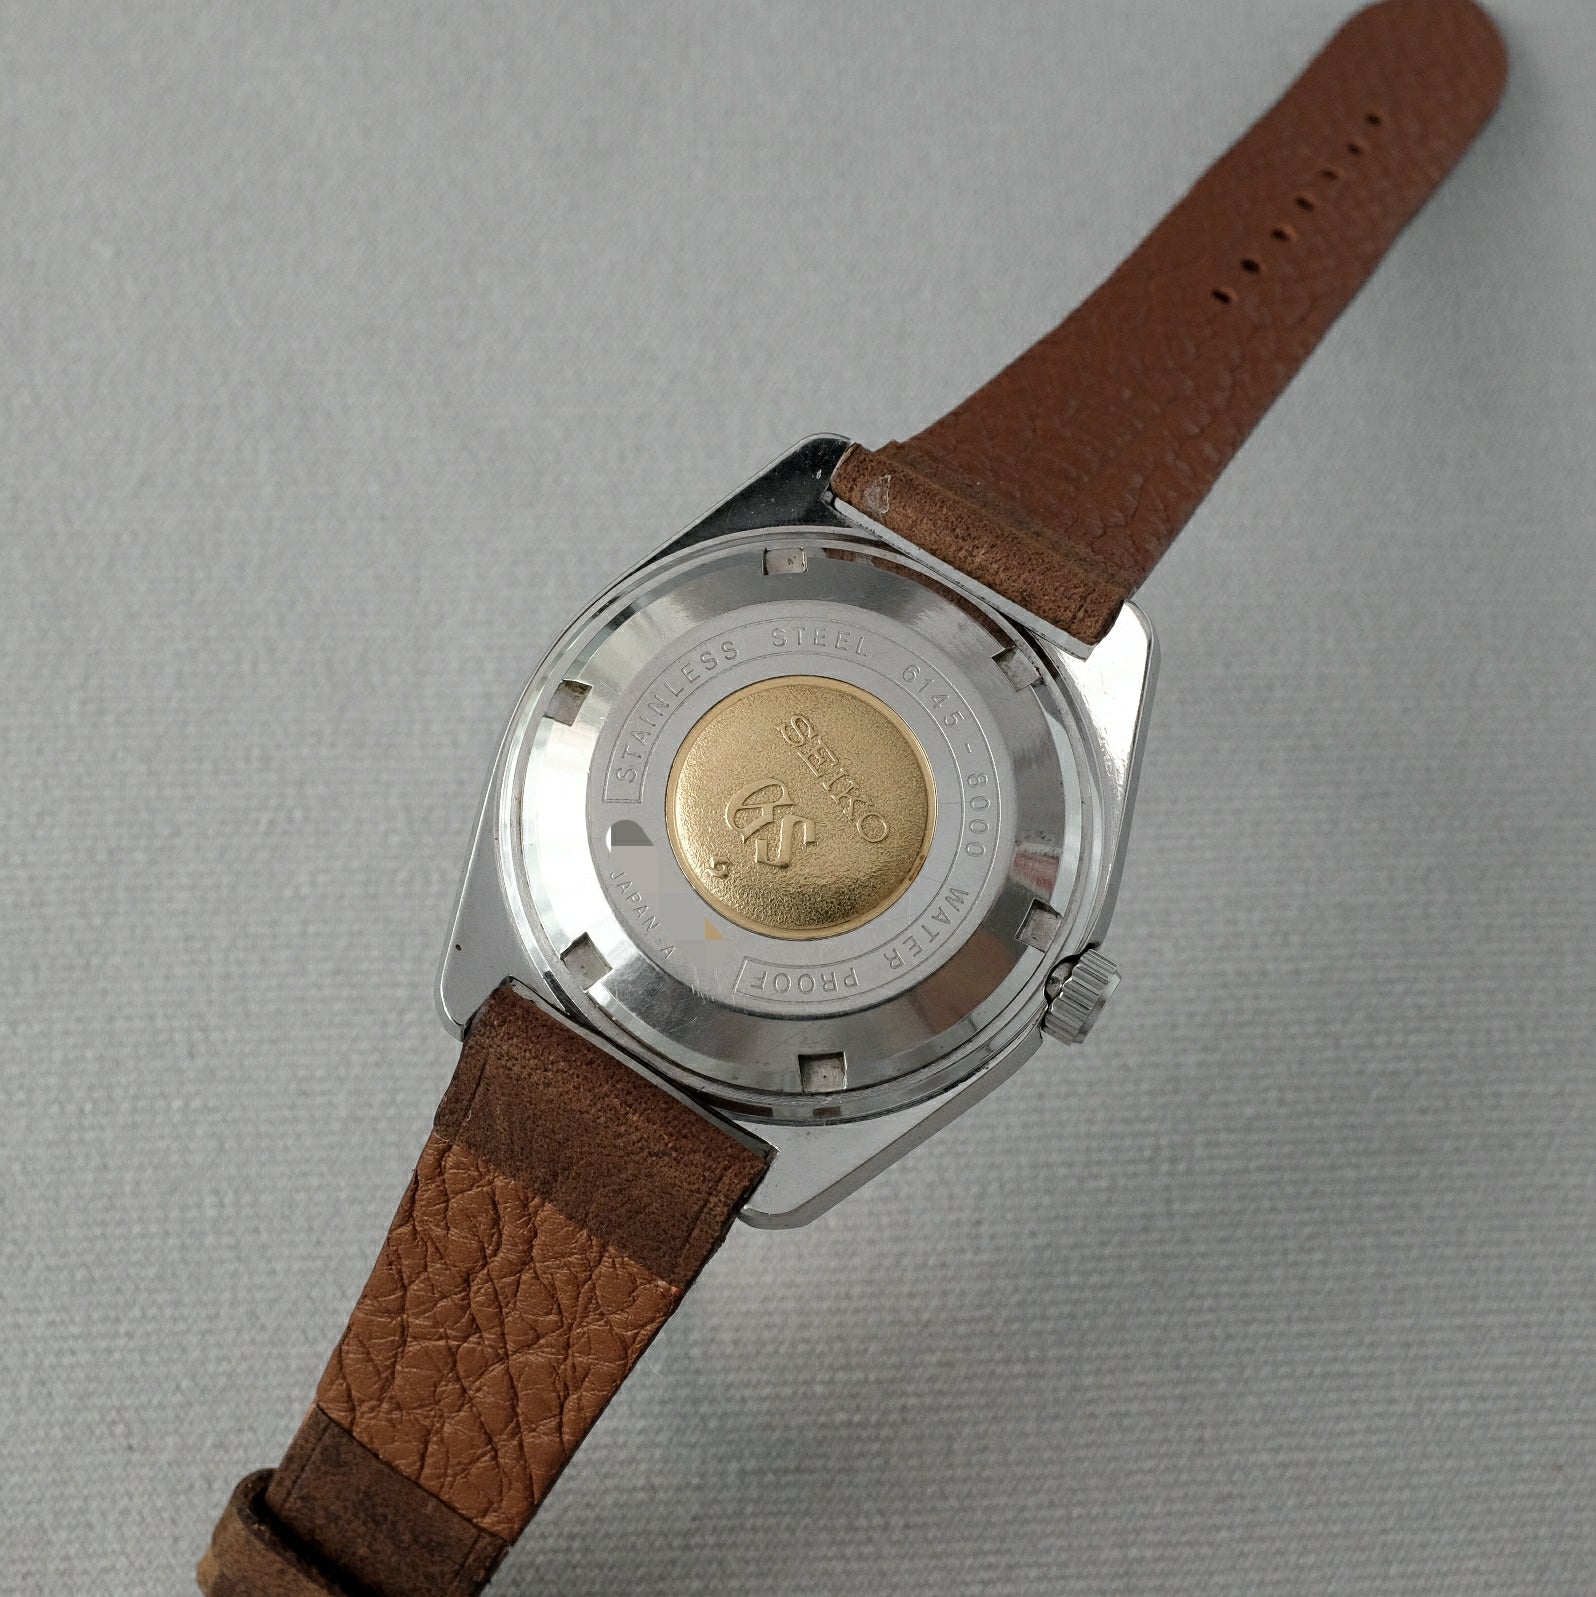 Seiko 6145-8000 from 1968